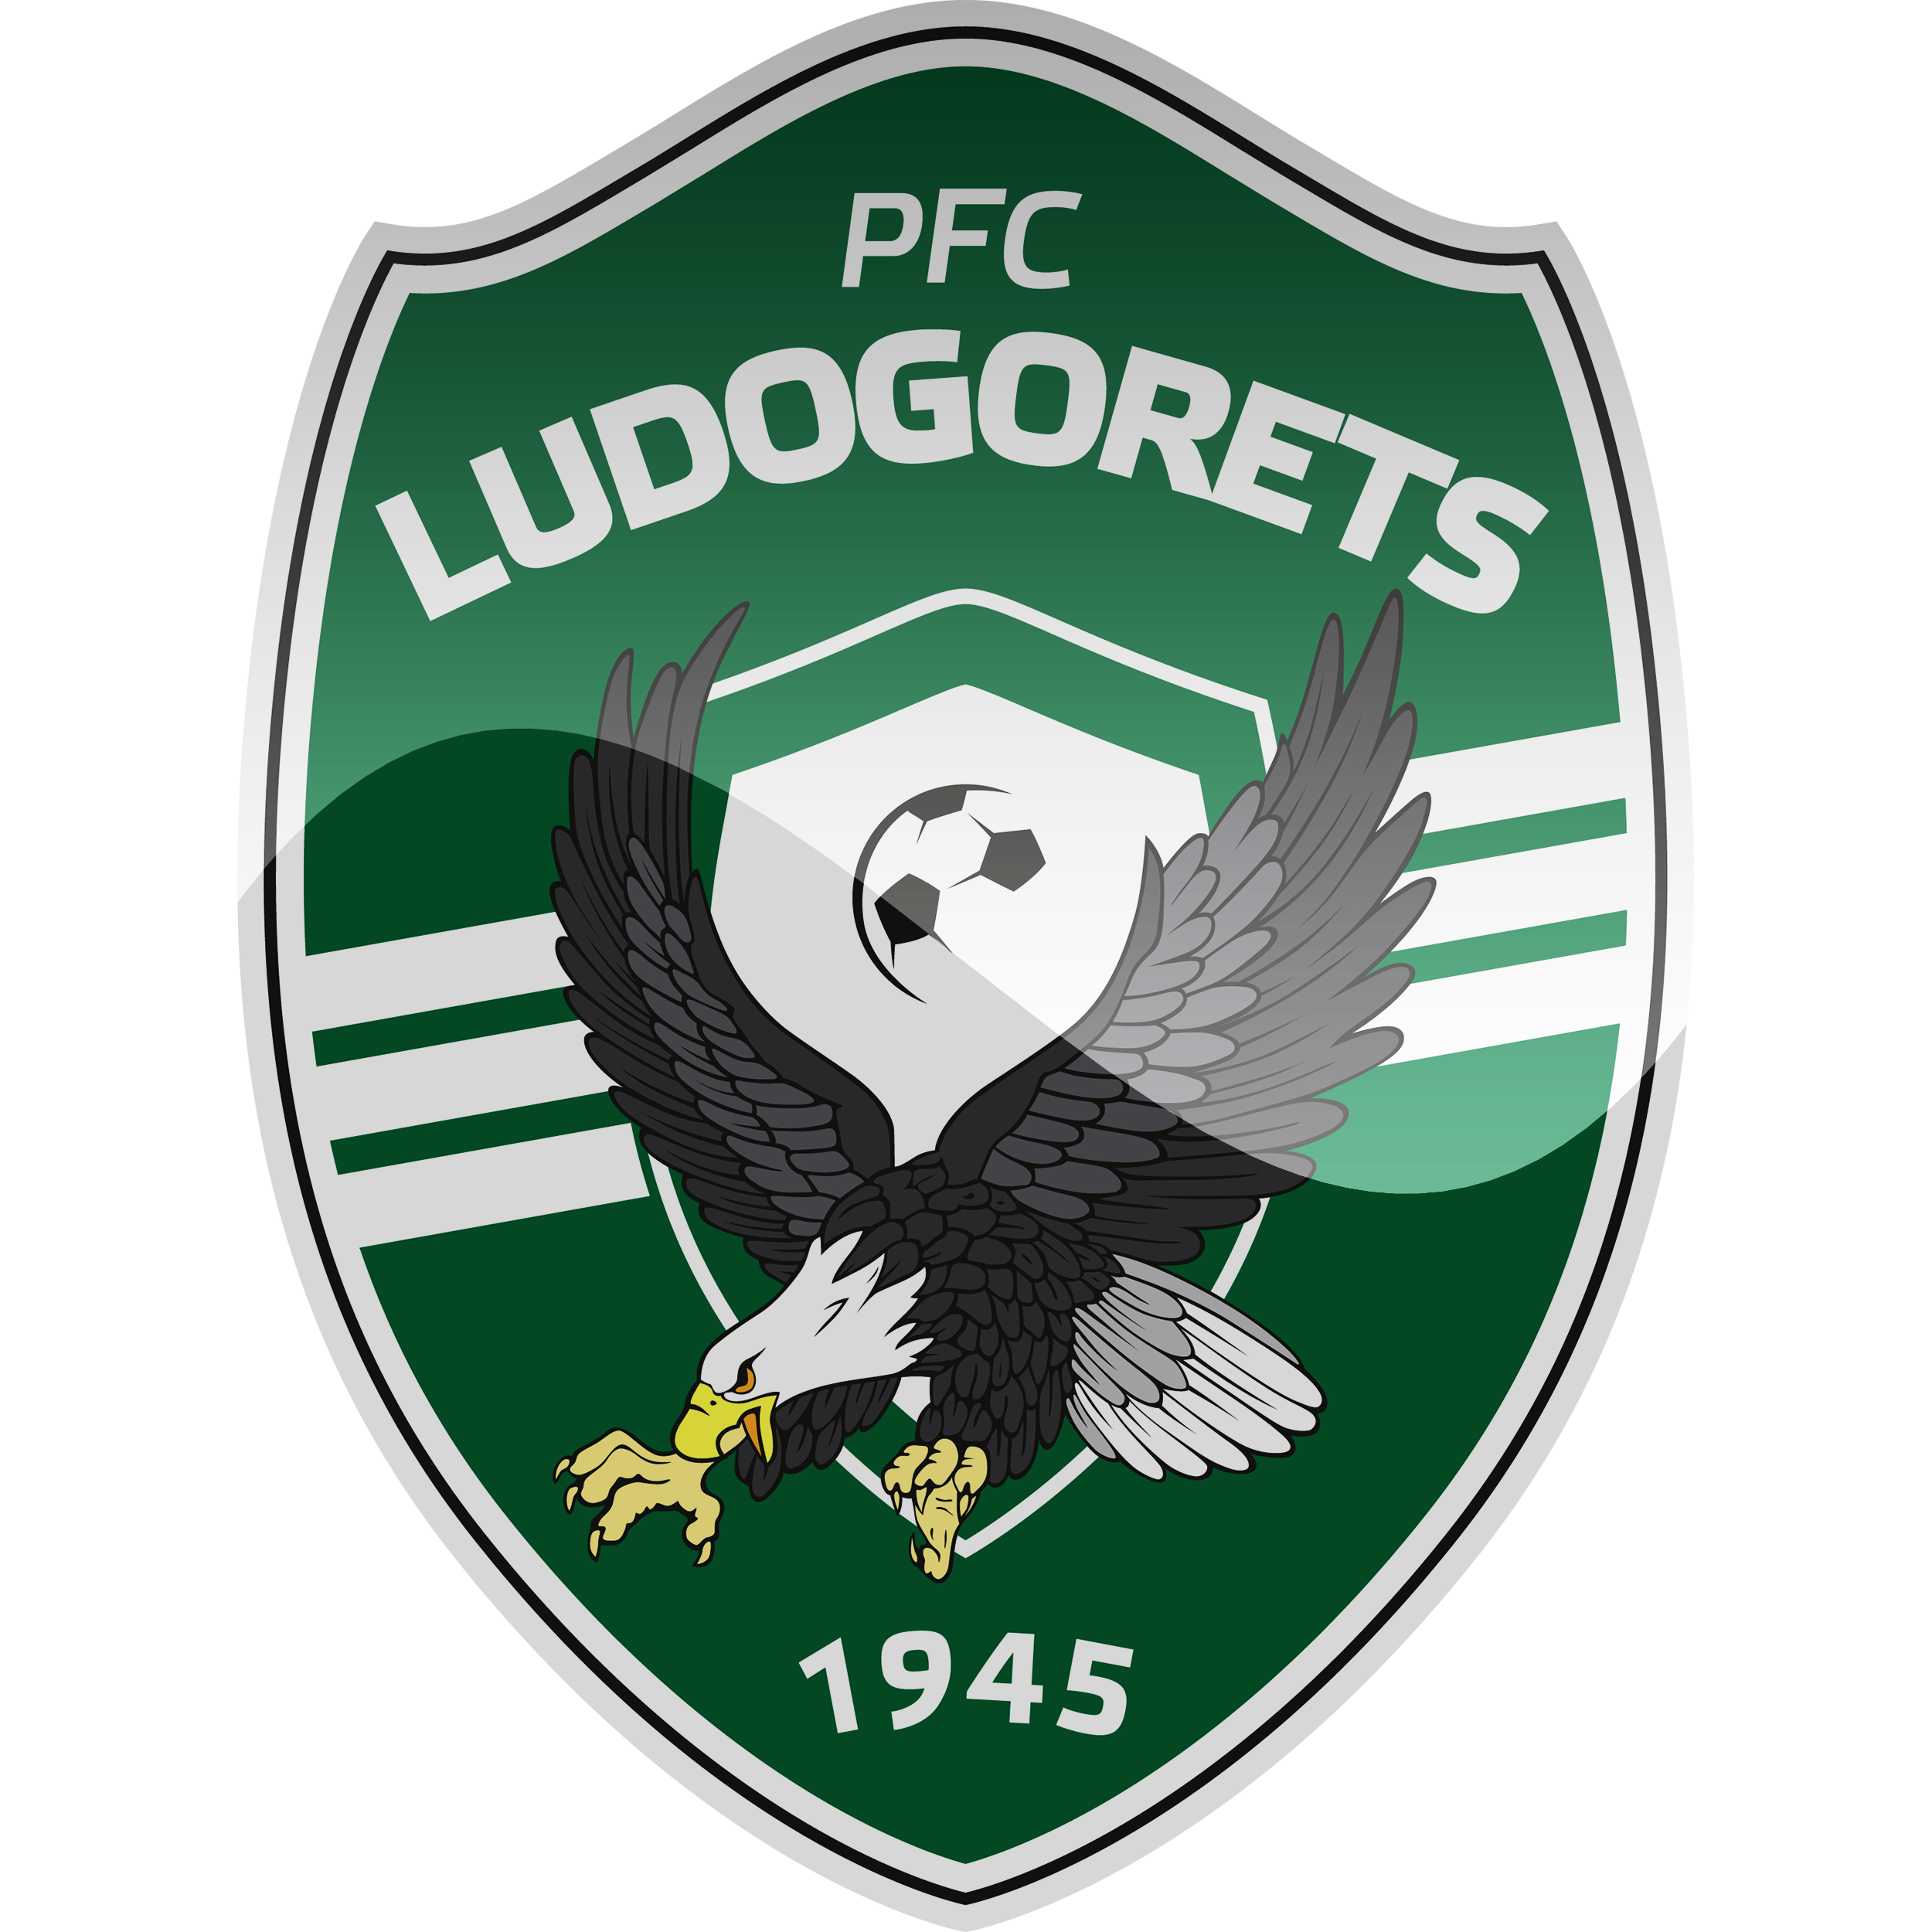 PFC Ludogorets Razgrad PNG